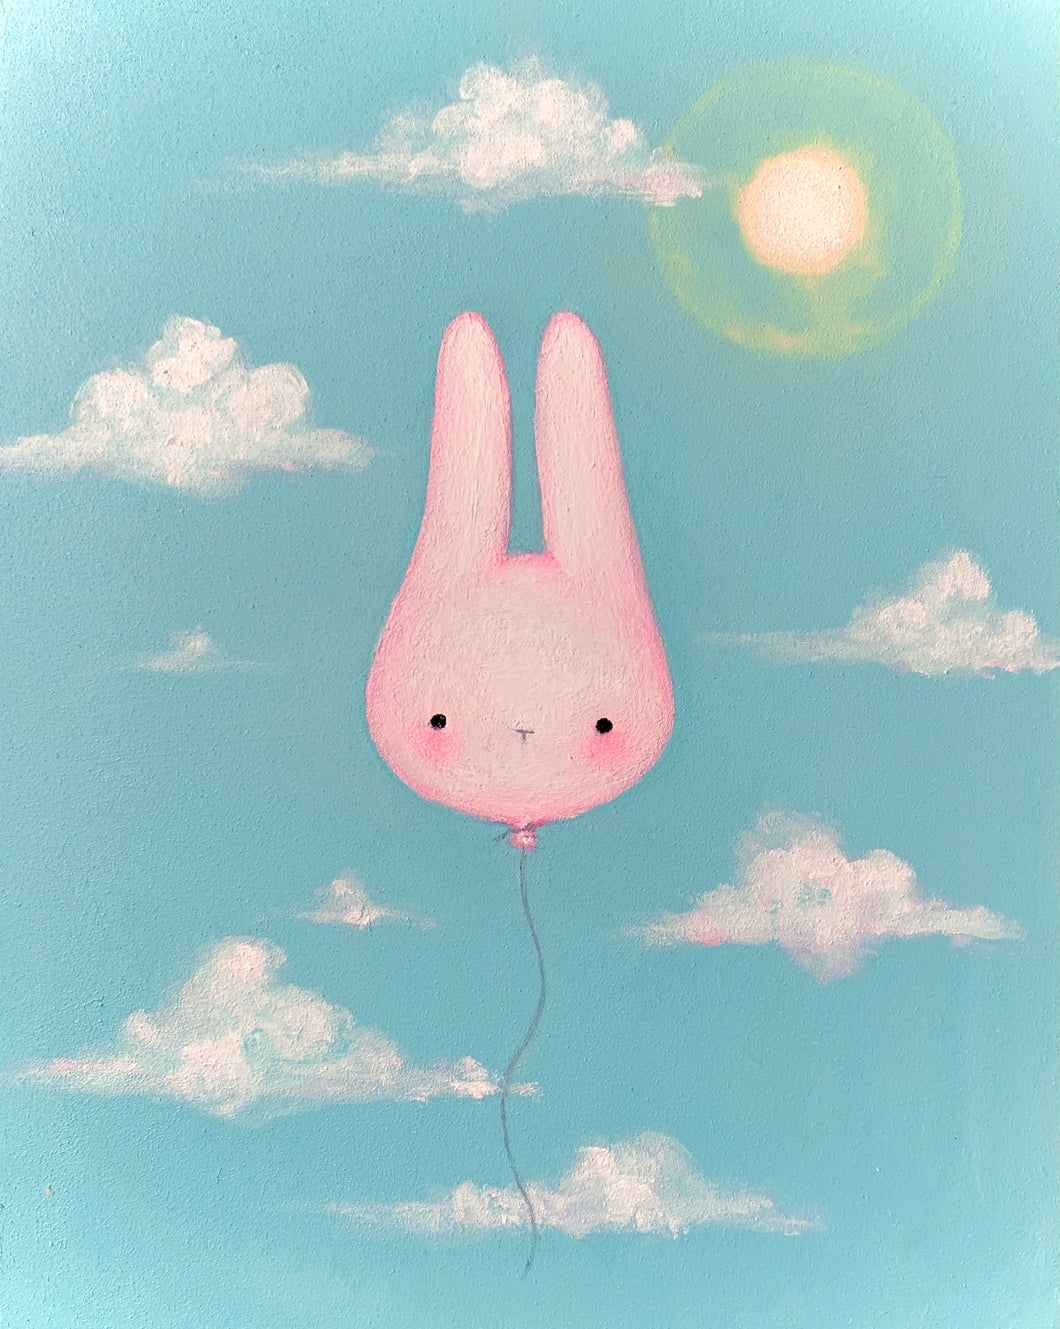 4x6 Full Bunny Balloon Print